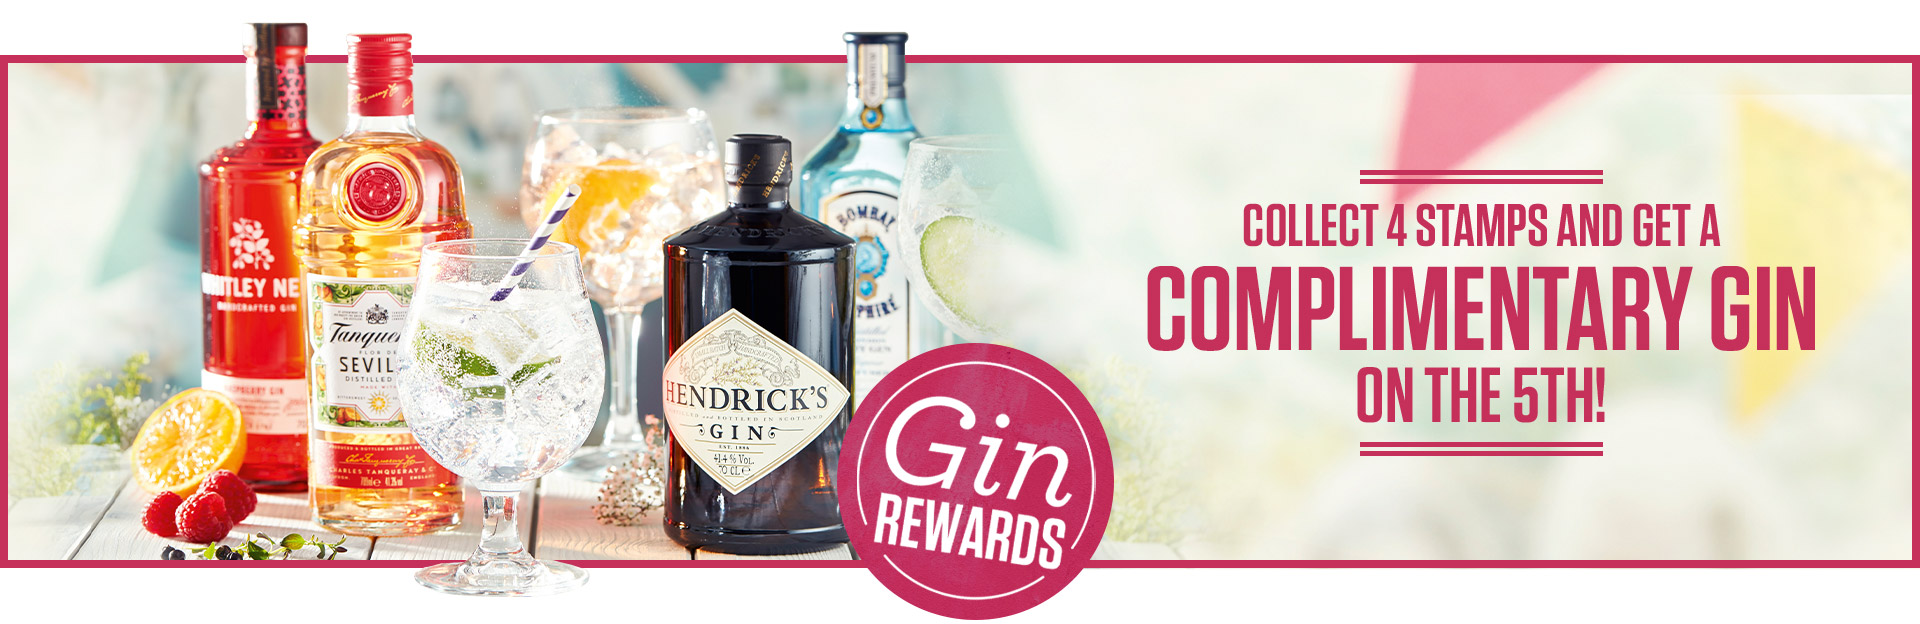 ginfestival-midpage-rewards-banner.jpg